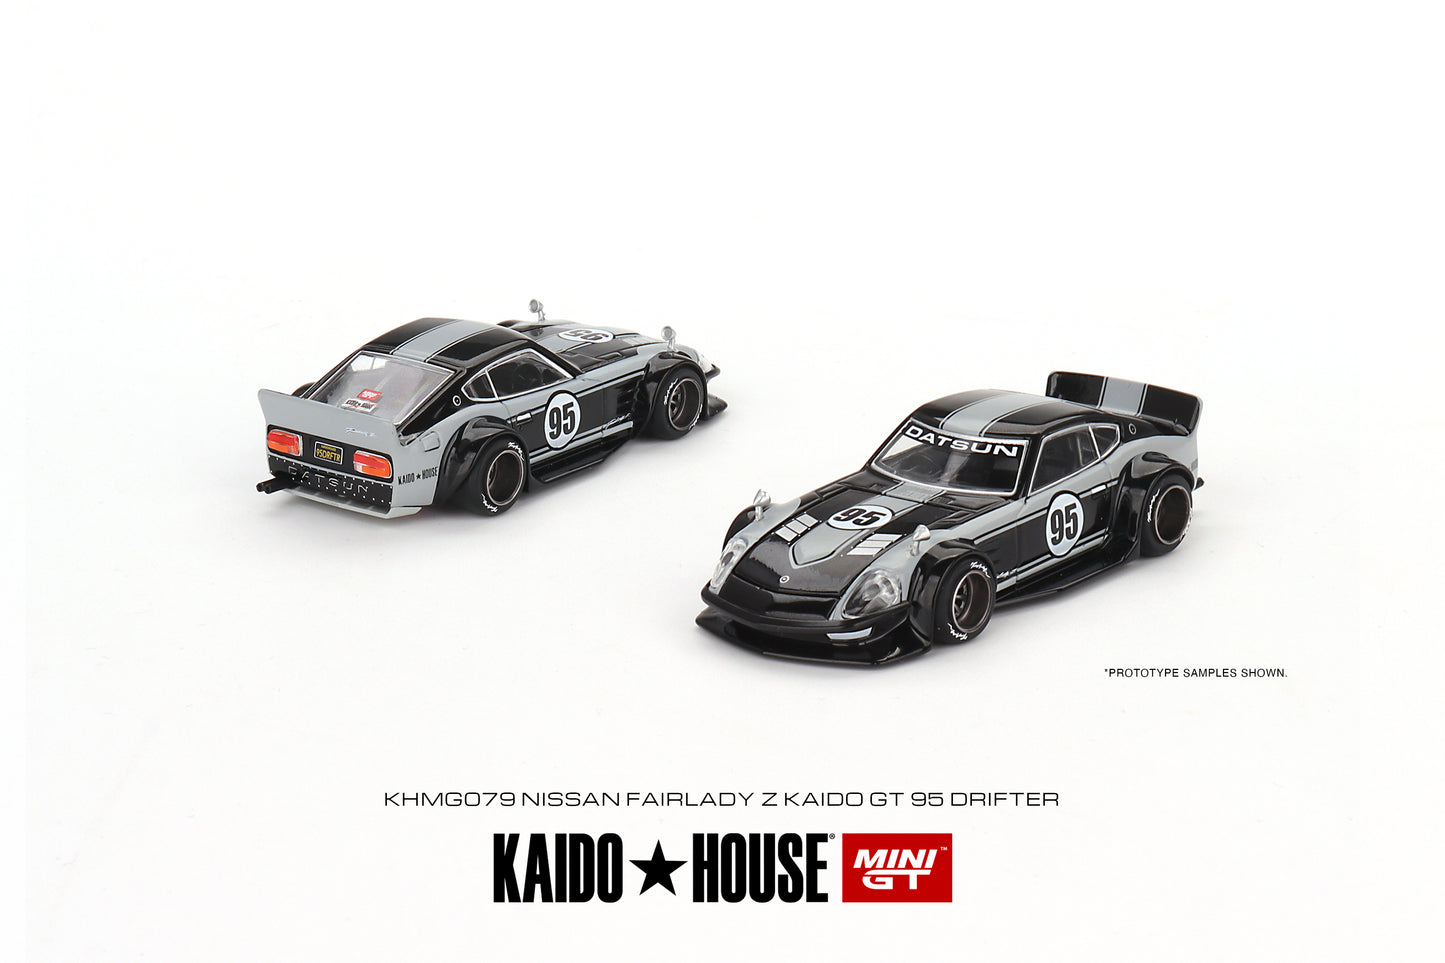 Mini GT x Kaido House Nissan Fairlady Z Kaido GT "95 Drifter"